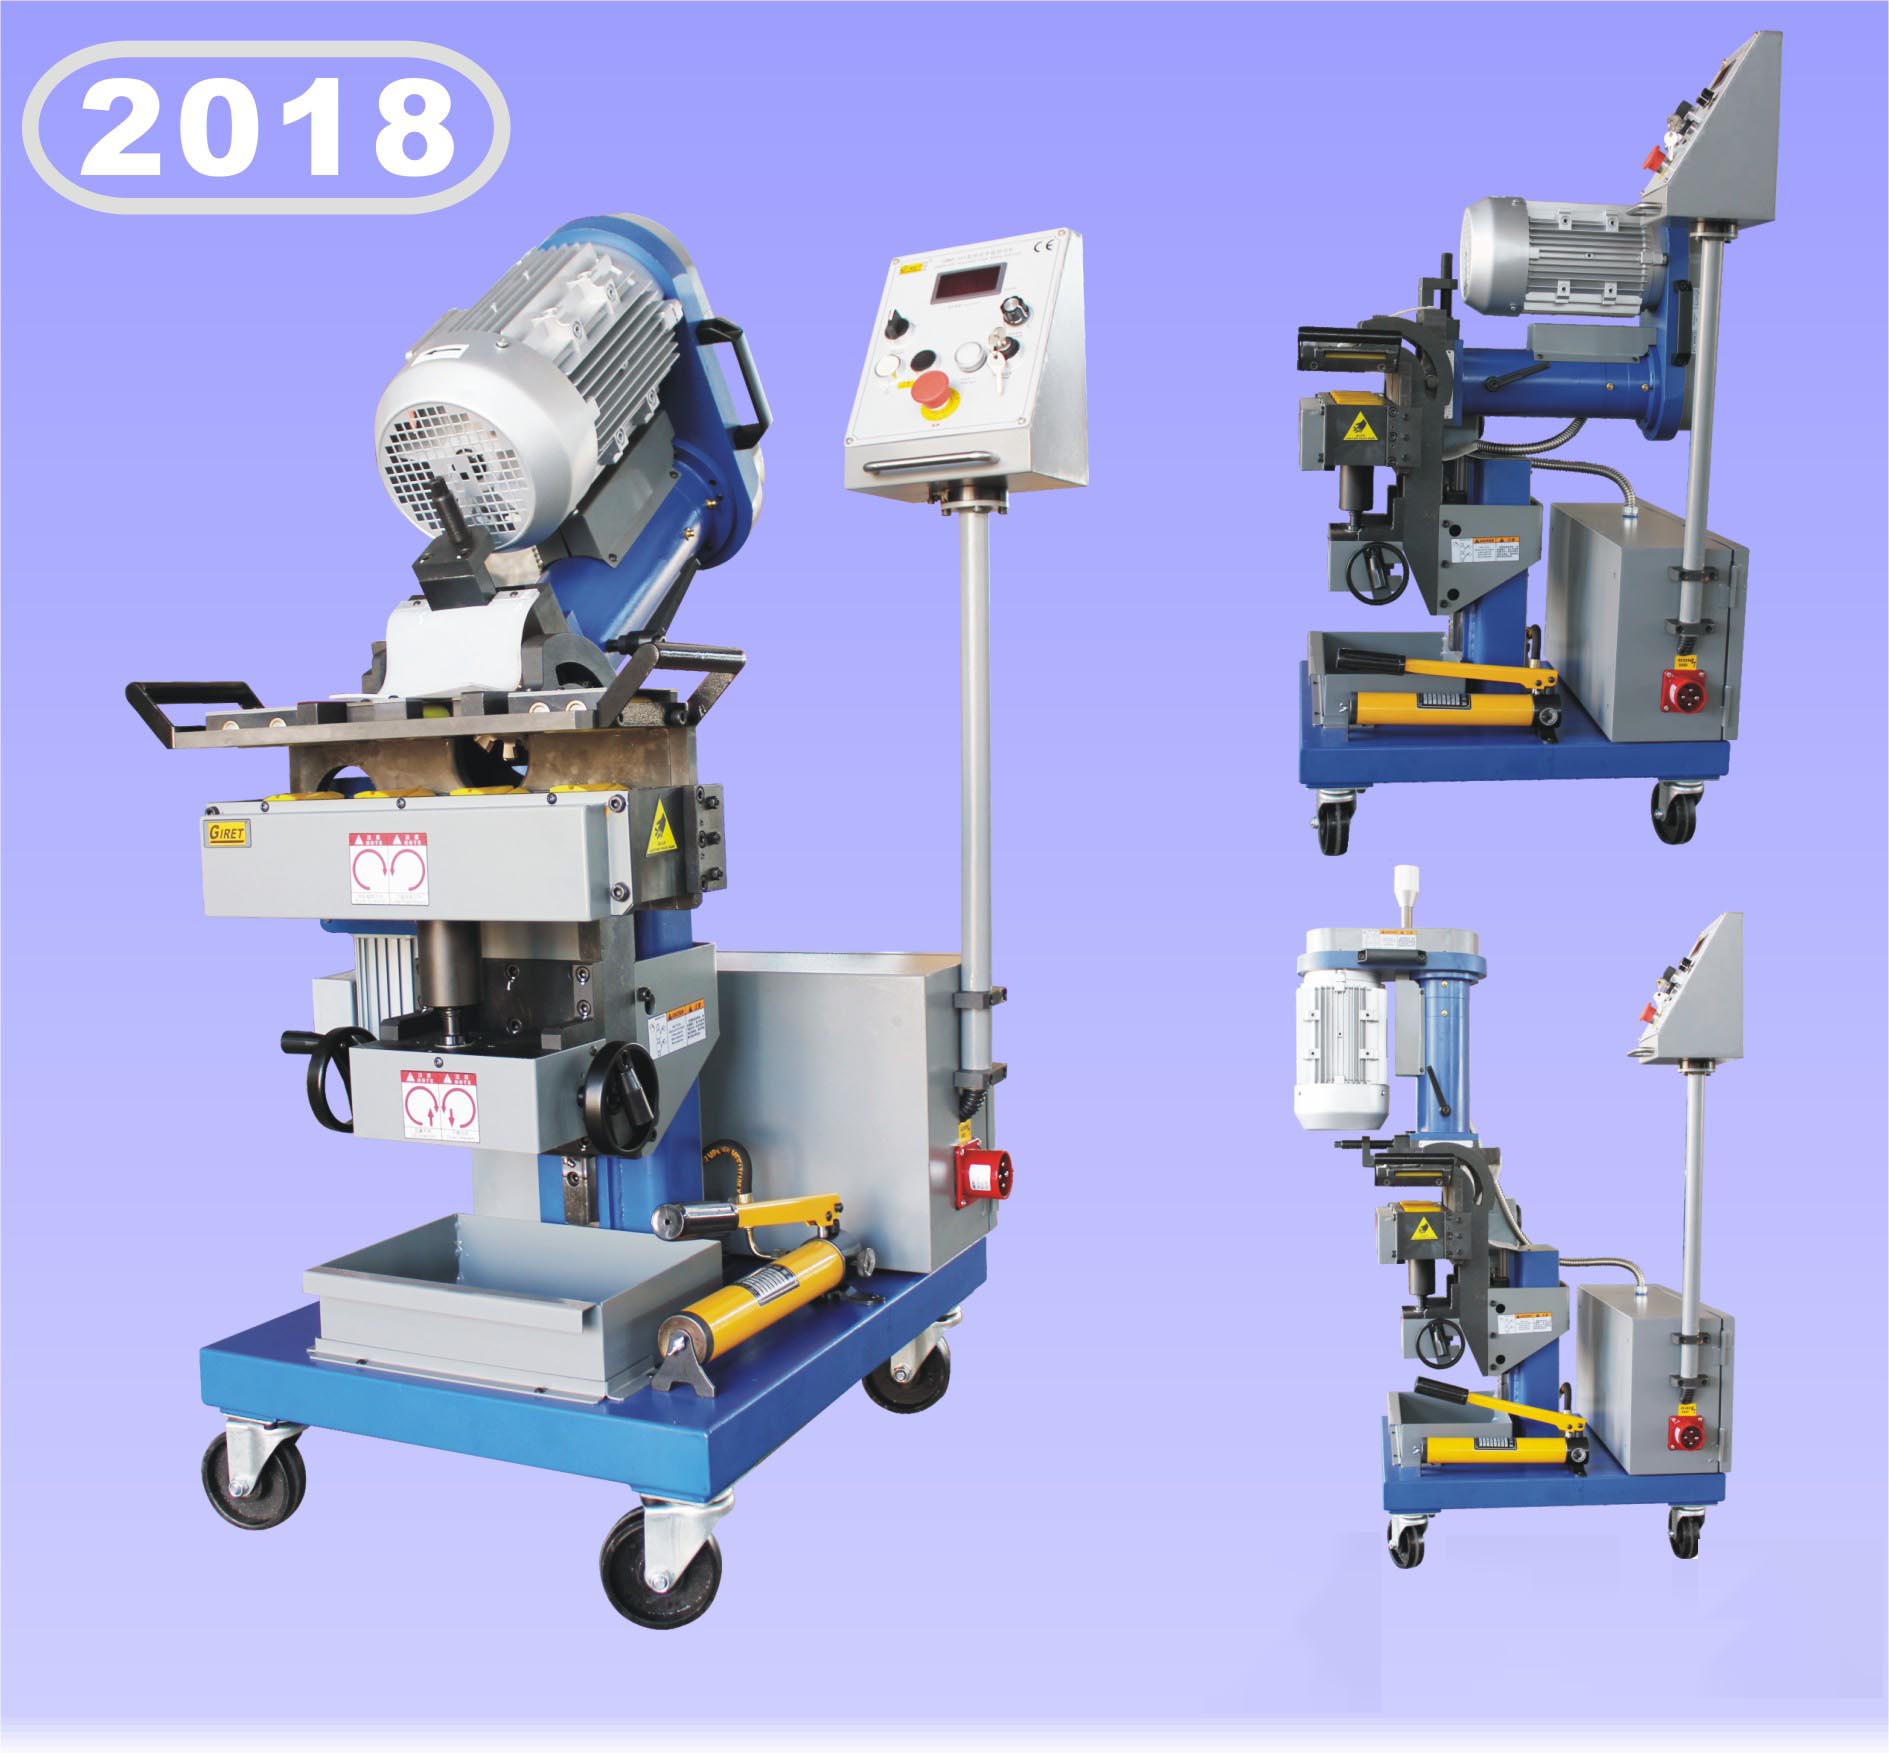 2018-GMMA-60L edge milling machine